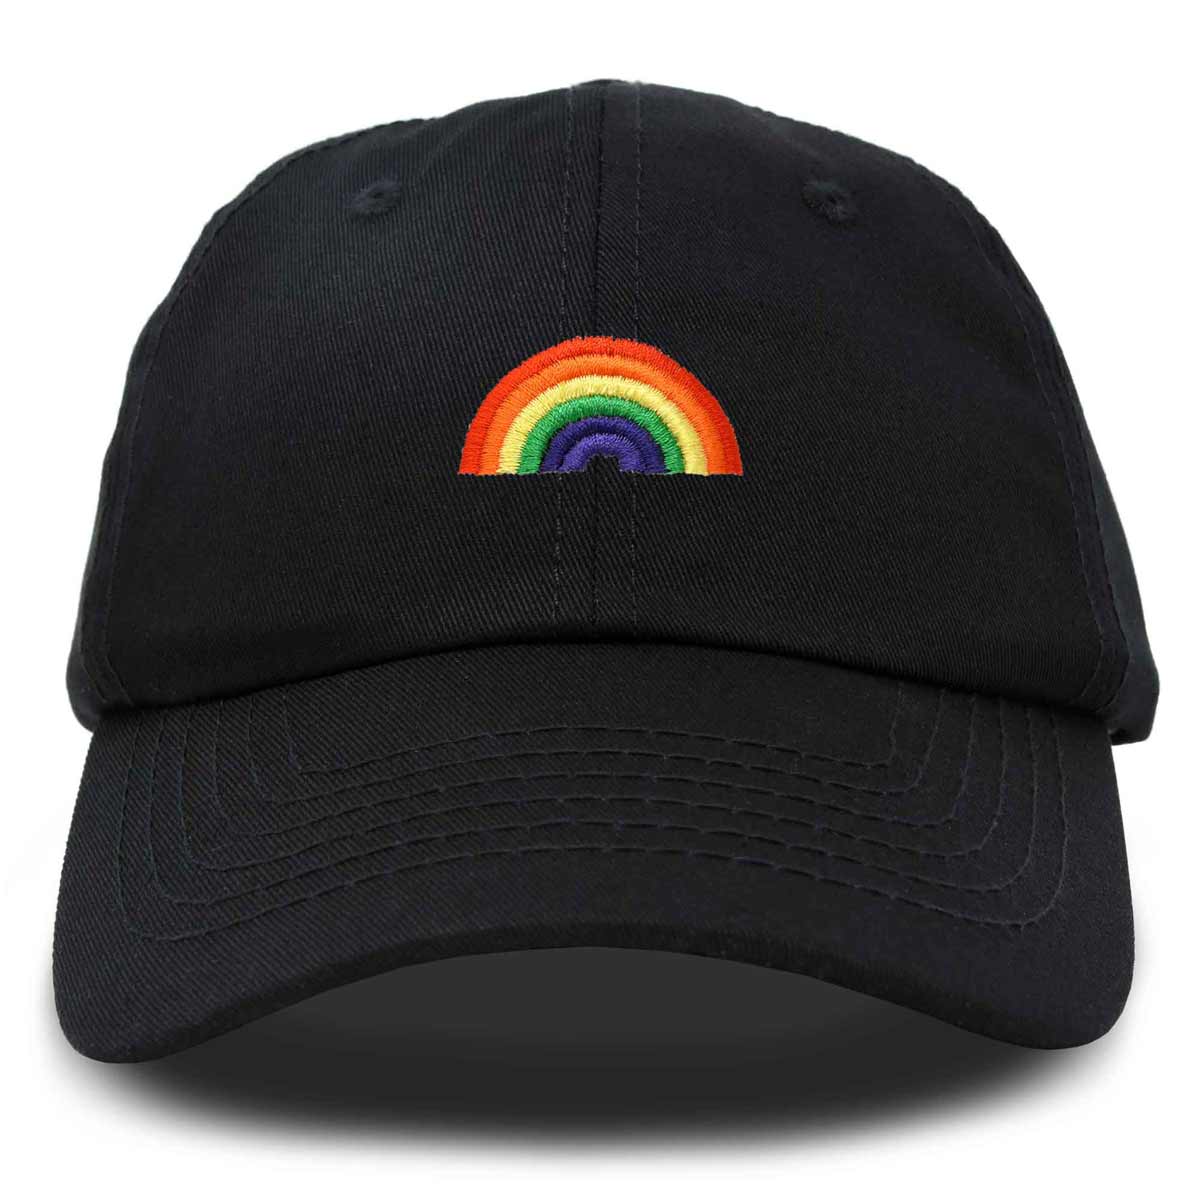 Rainbow Baseball Hat - Black